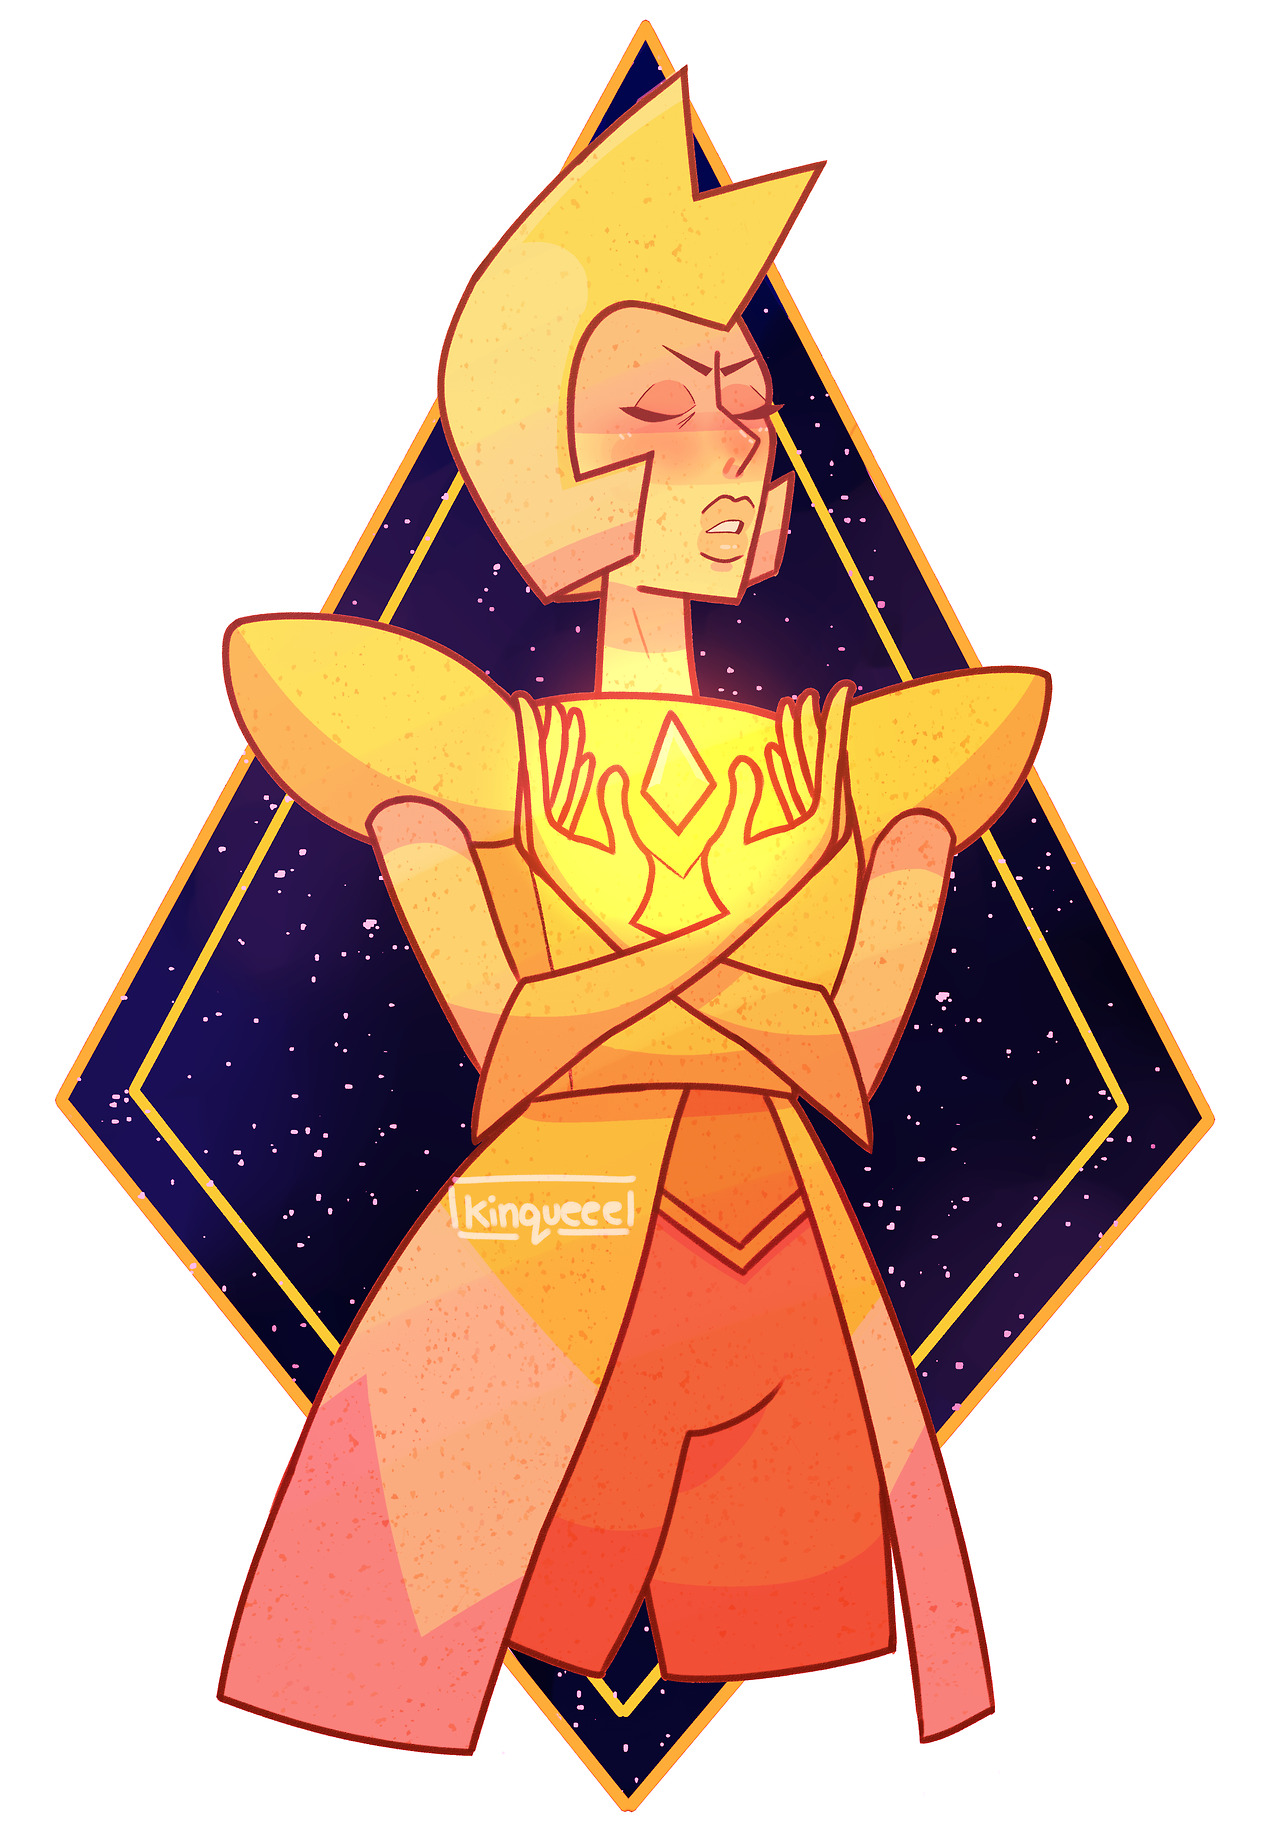 y… yes my Diamond?